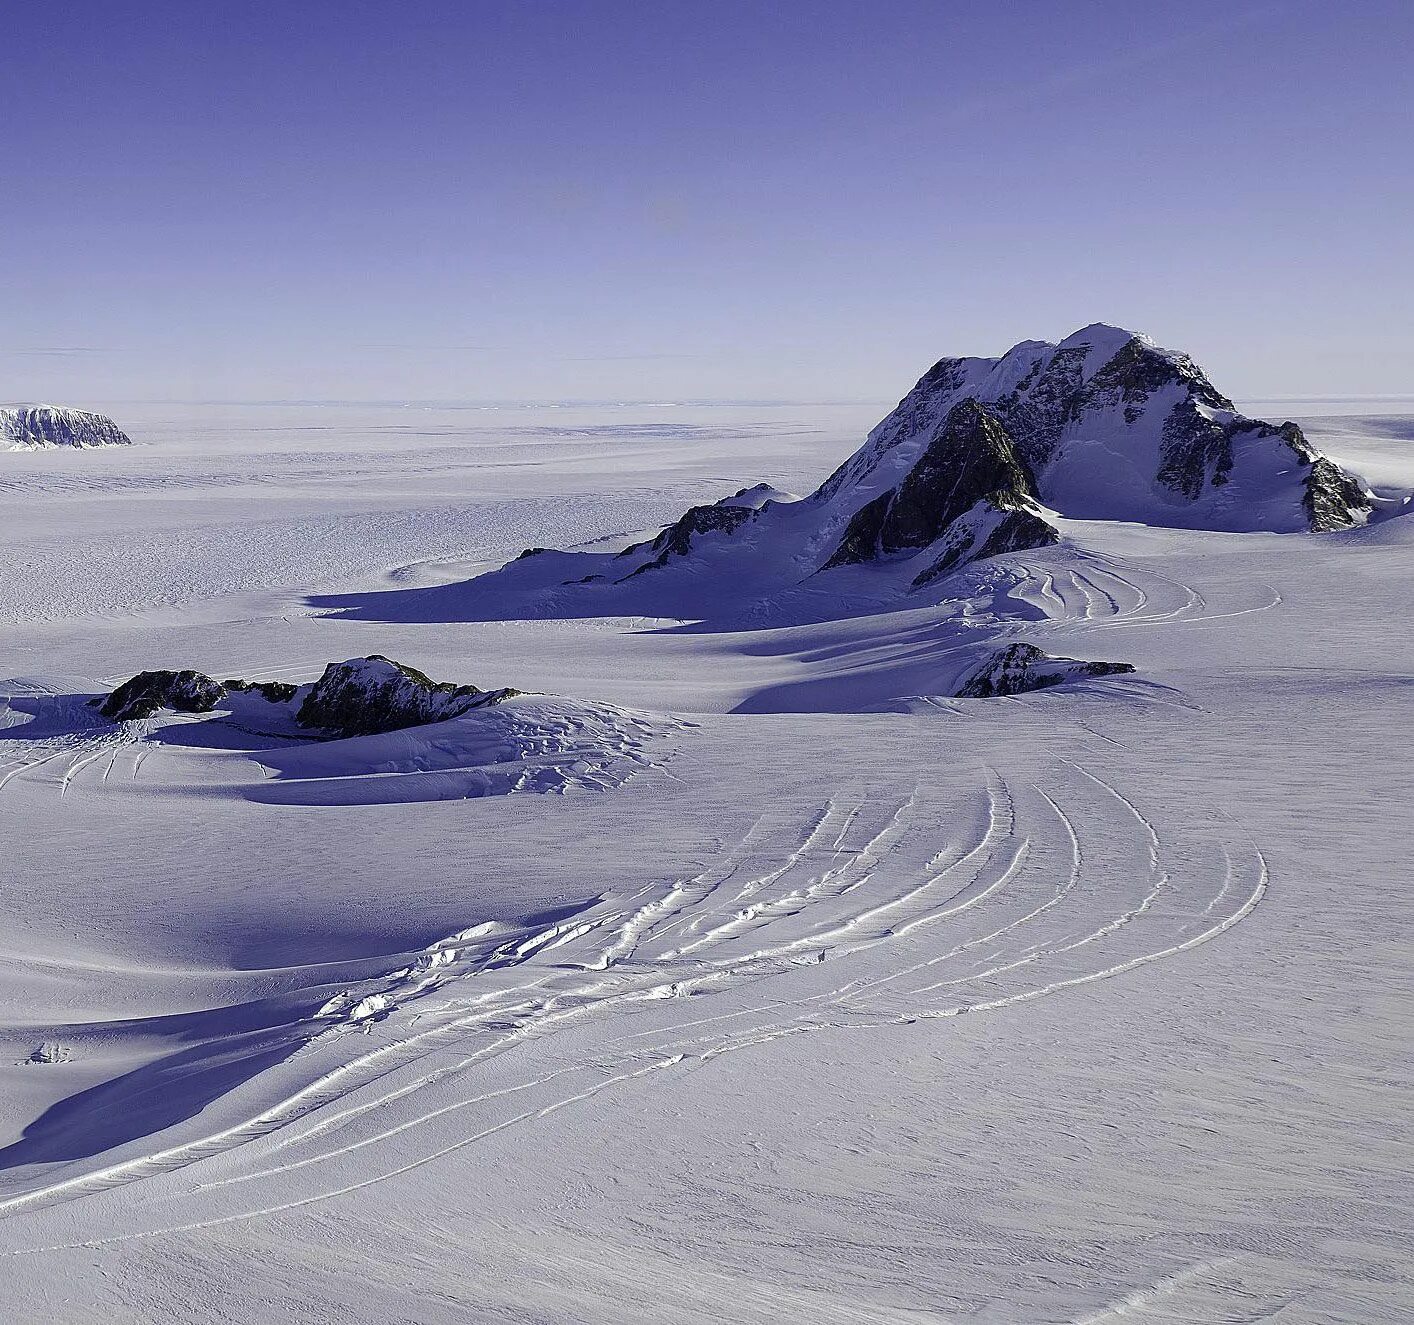 Айс фор. Горы Антарктиды Элсуэрт.